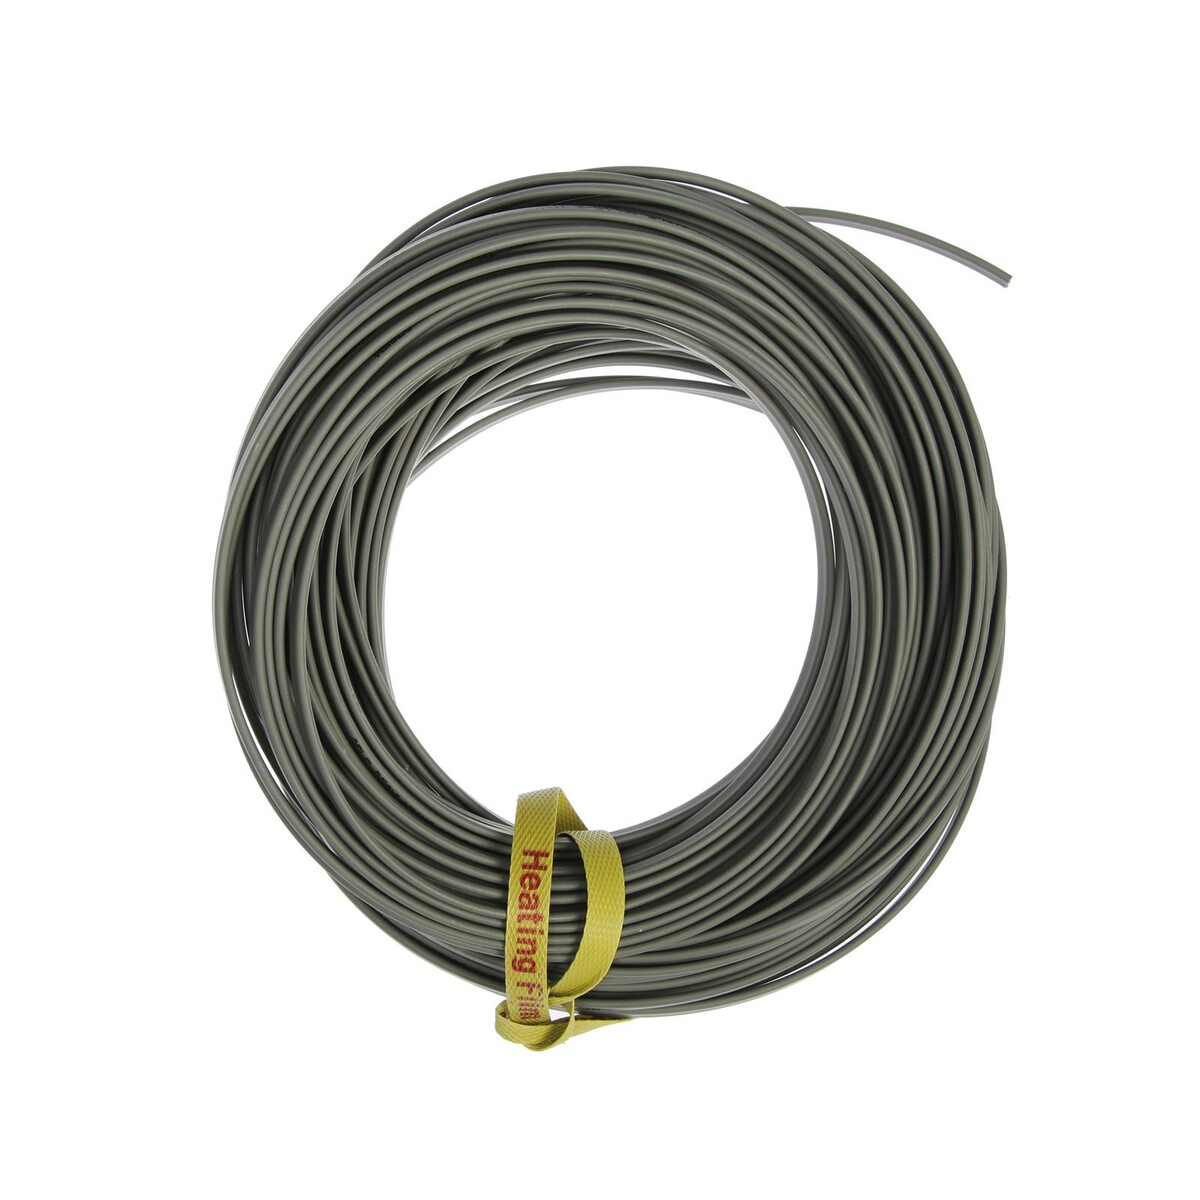 Саморегулирующийся греющий кабель srl 16-2, 50 м саморегулирующийся греющий кабель srl 16 2 бухта 20 м